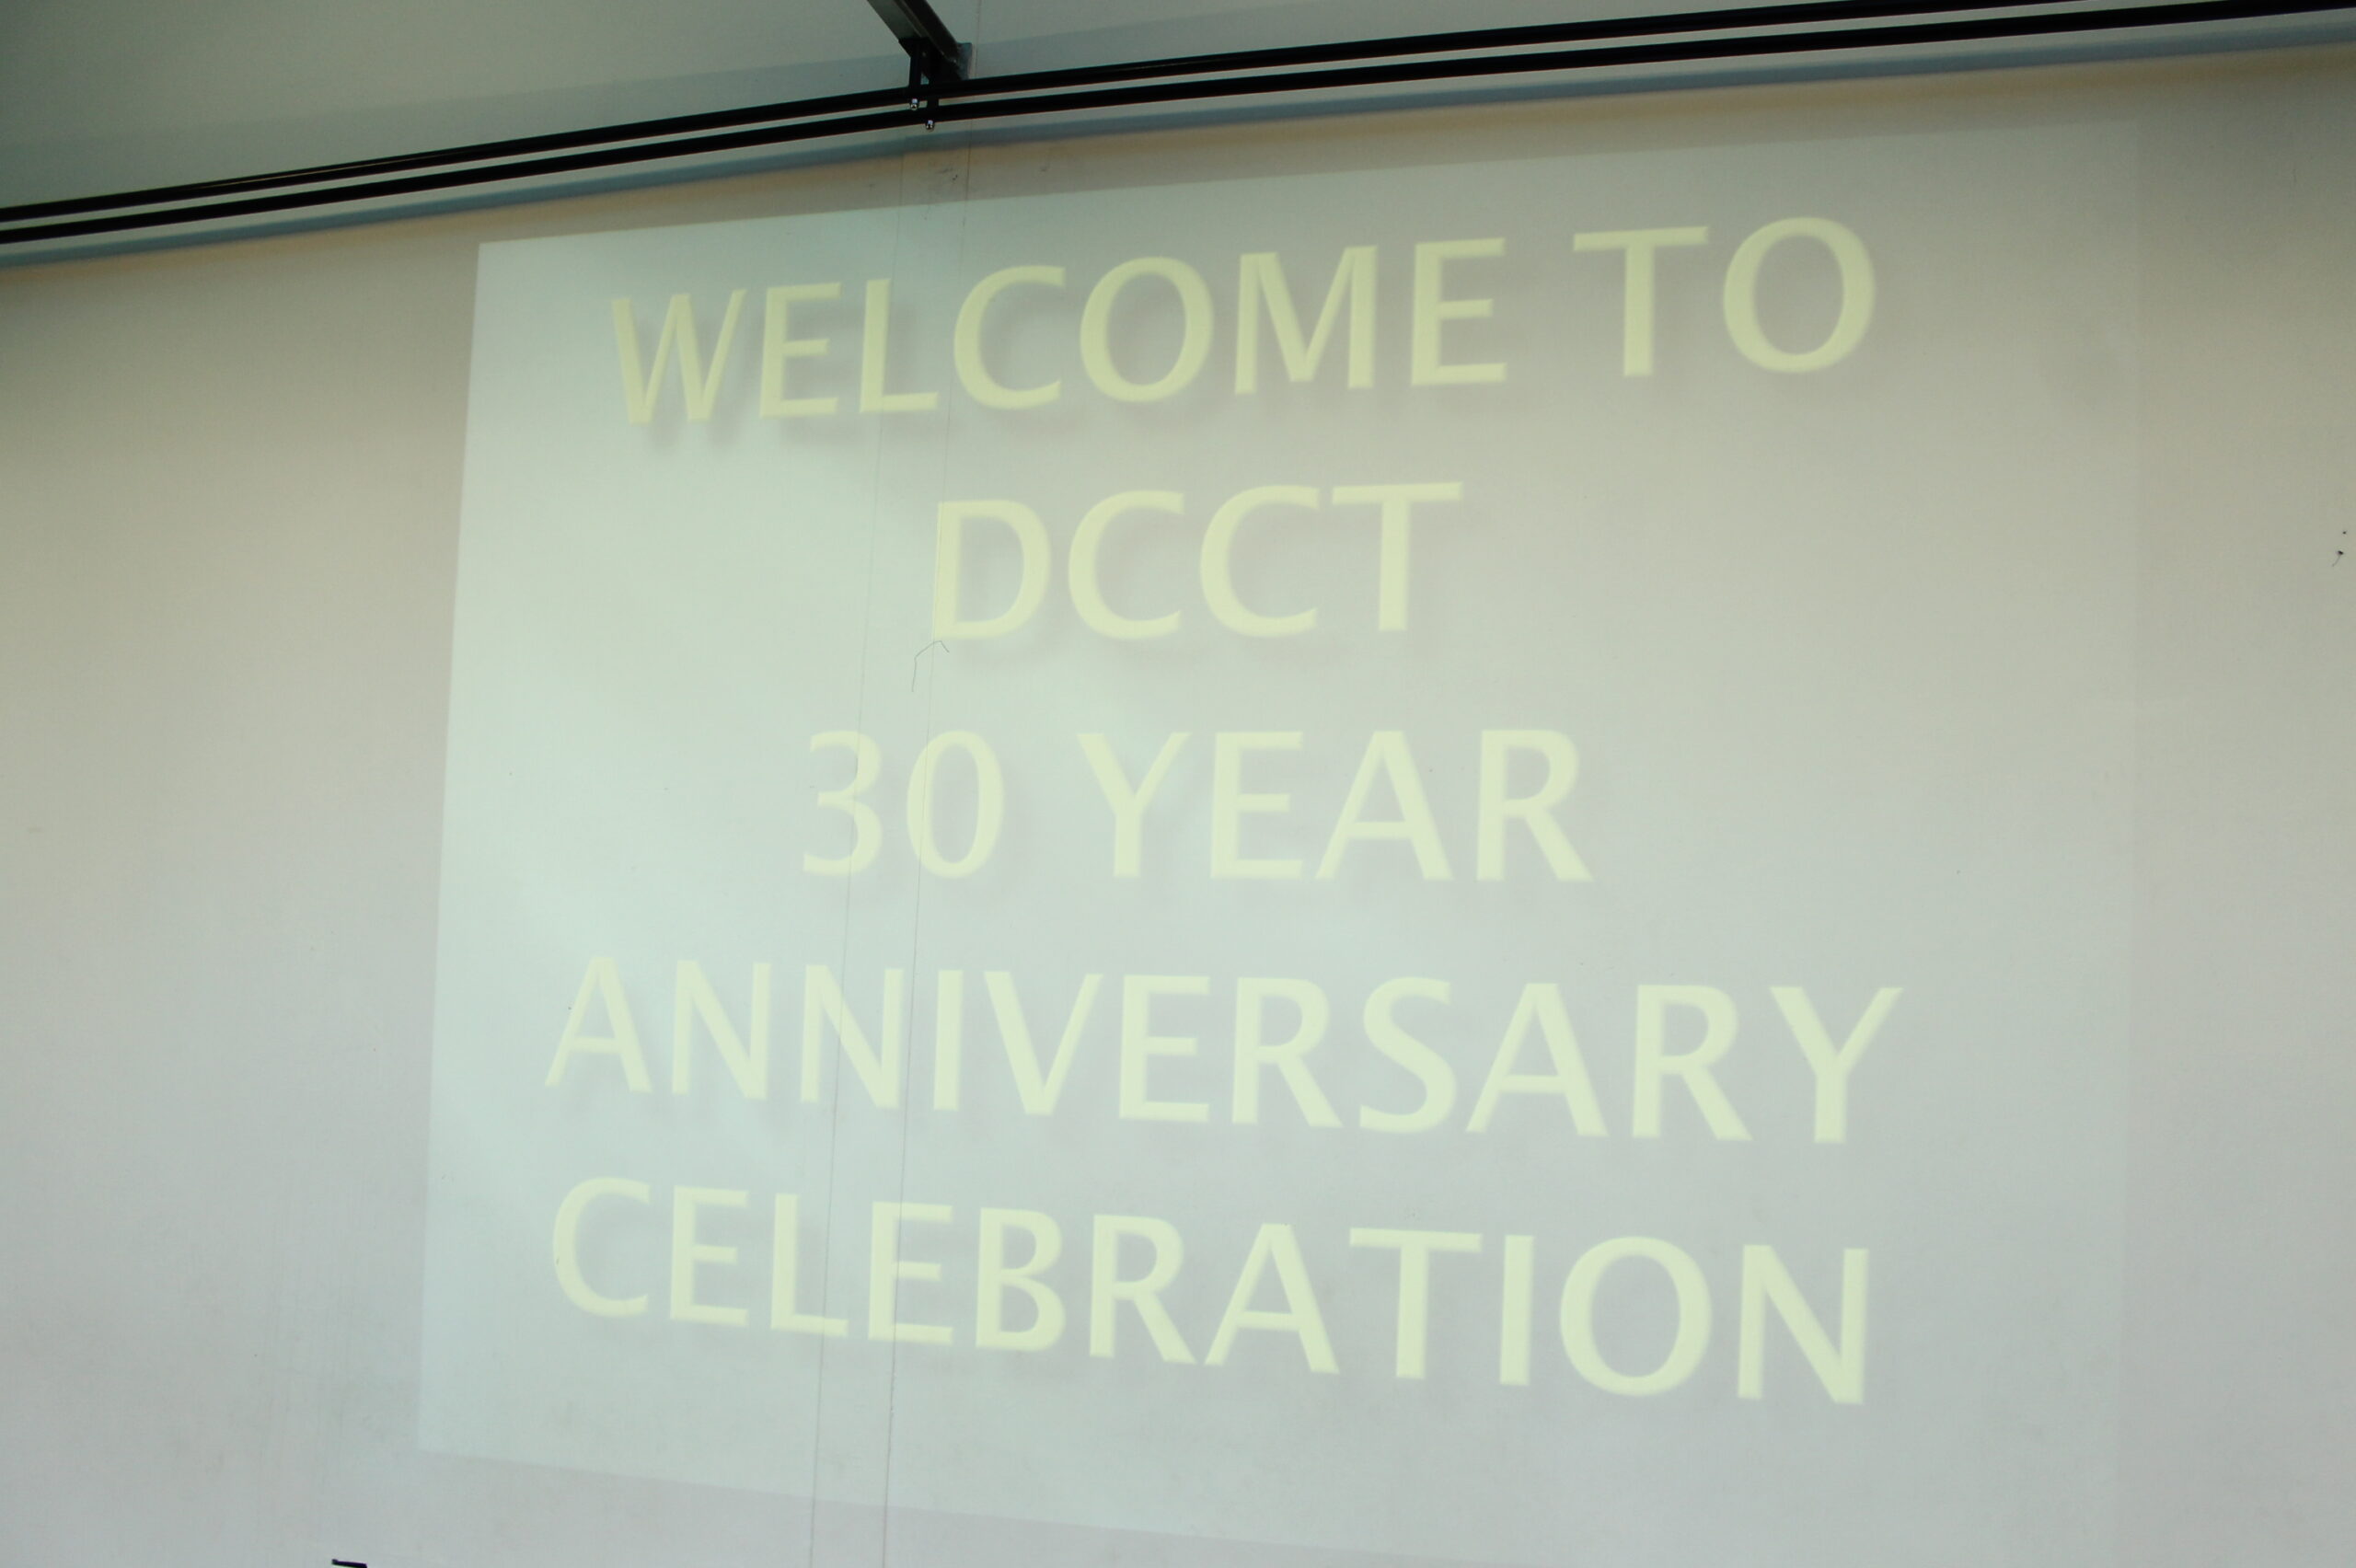 DCCT: 30 Year Anniversary Celebration (28 Oct 2017)